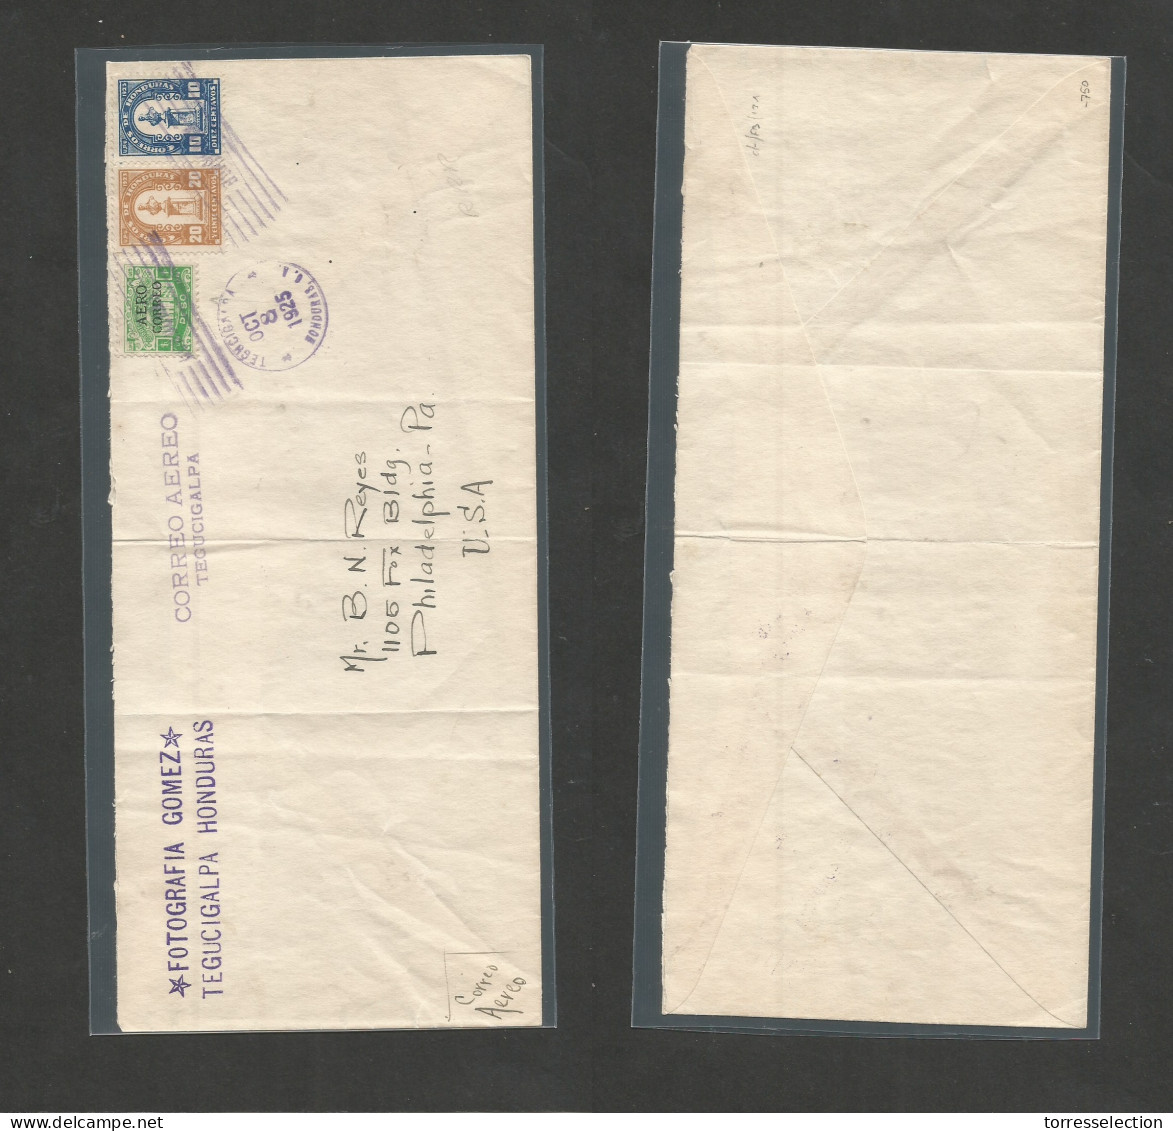 HONDURAS. 1925 (Oct 8) Tepucigalpa. USA, Pha, PA. Air Multifkd Fotografia Business Envelope, Including 1 Peso Green Aere - Honduras